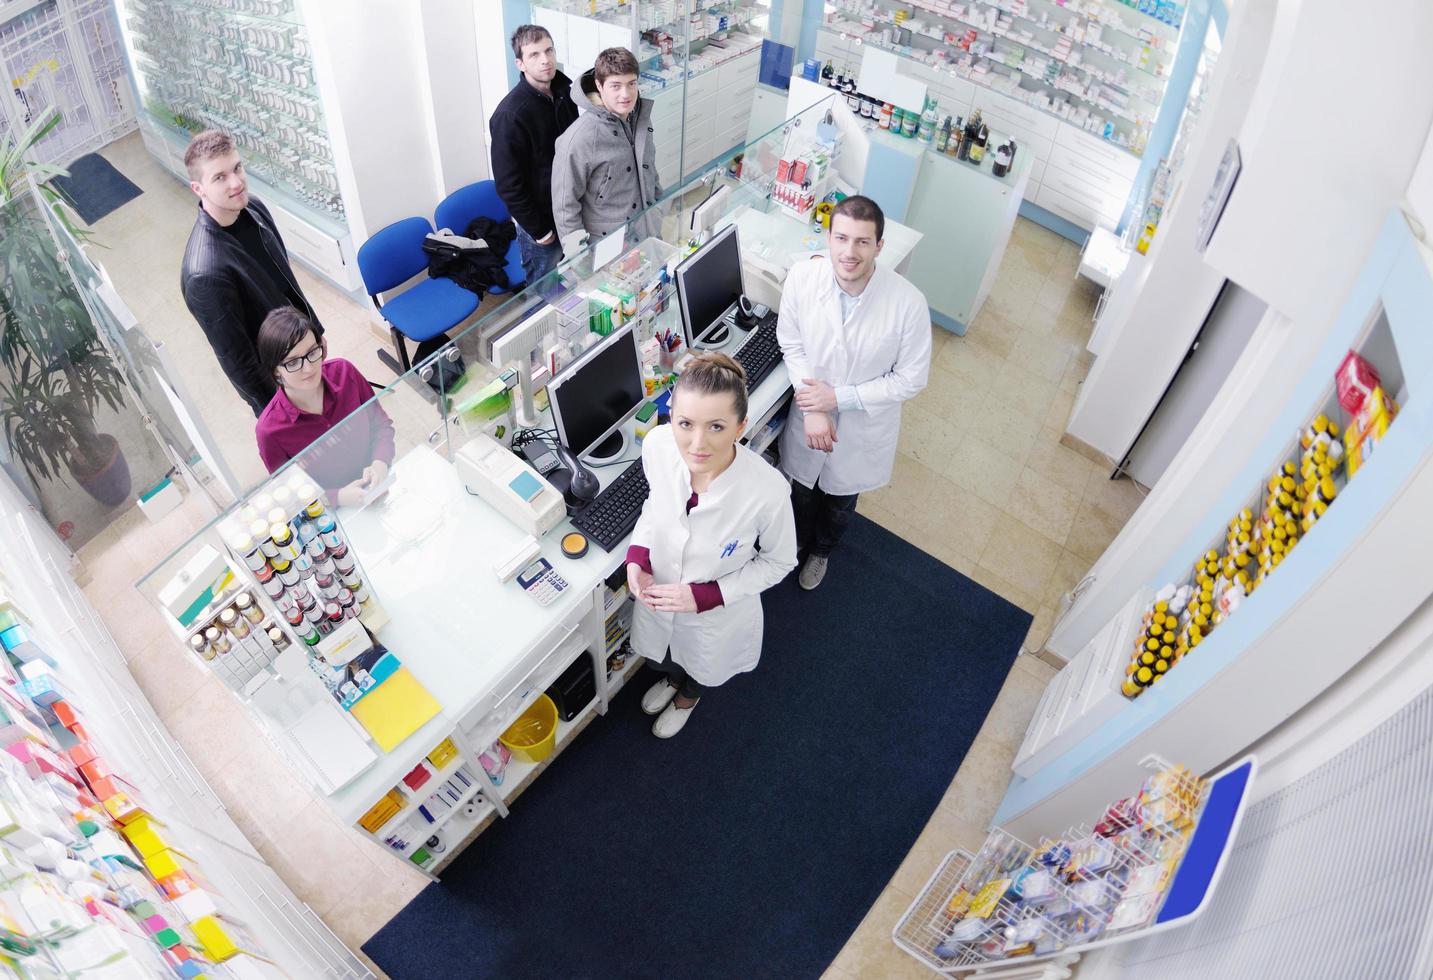 pharmacist suggesting medical drug to buyer in pharmacy drugstore photo